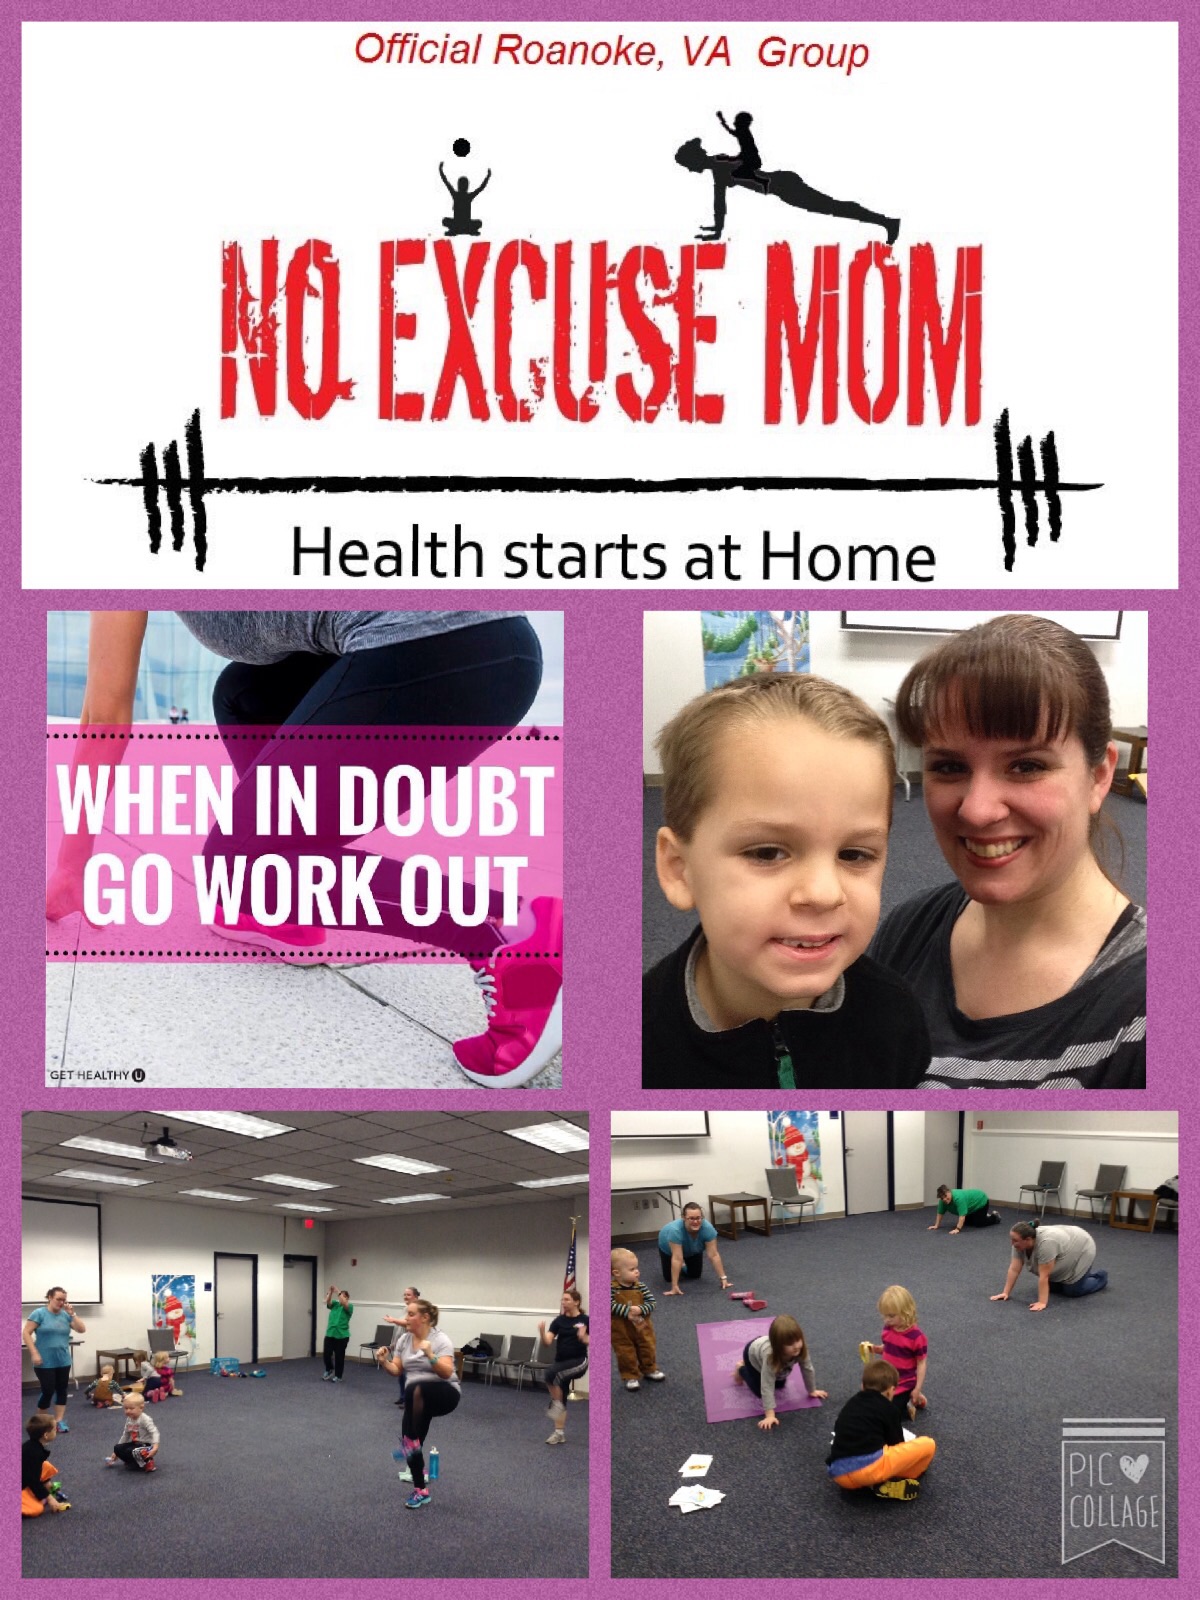 FREE Fitness Group for women No Excuse Moms, Roanoke, VA online